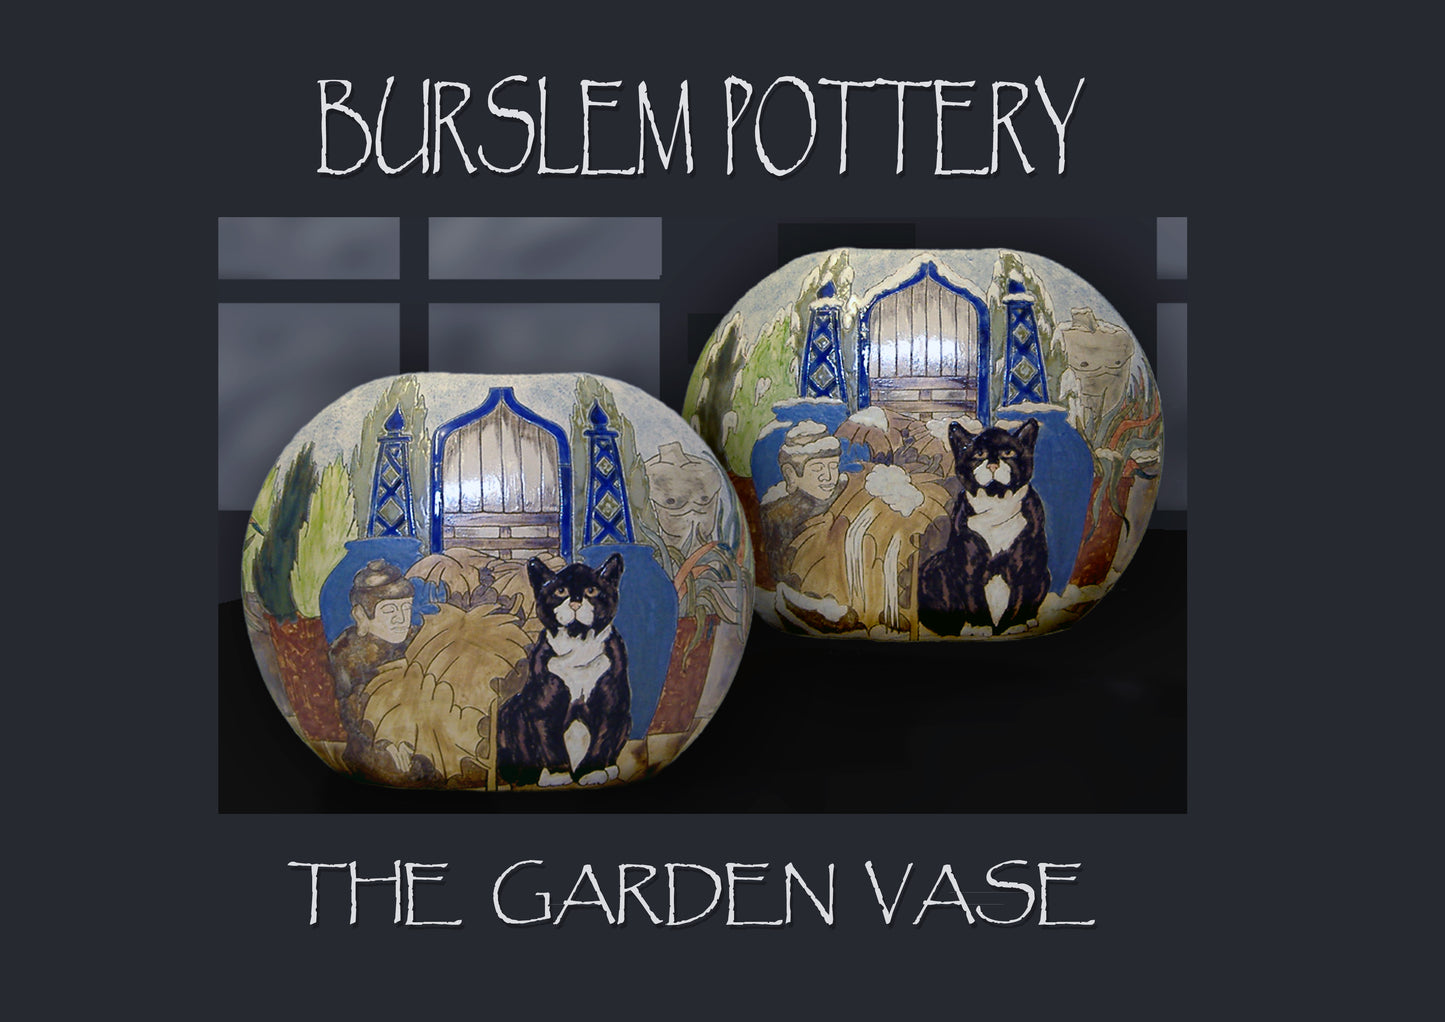 Commission vase The Garden